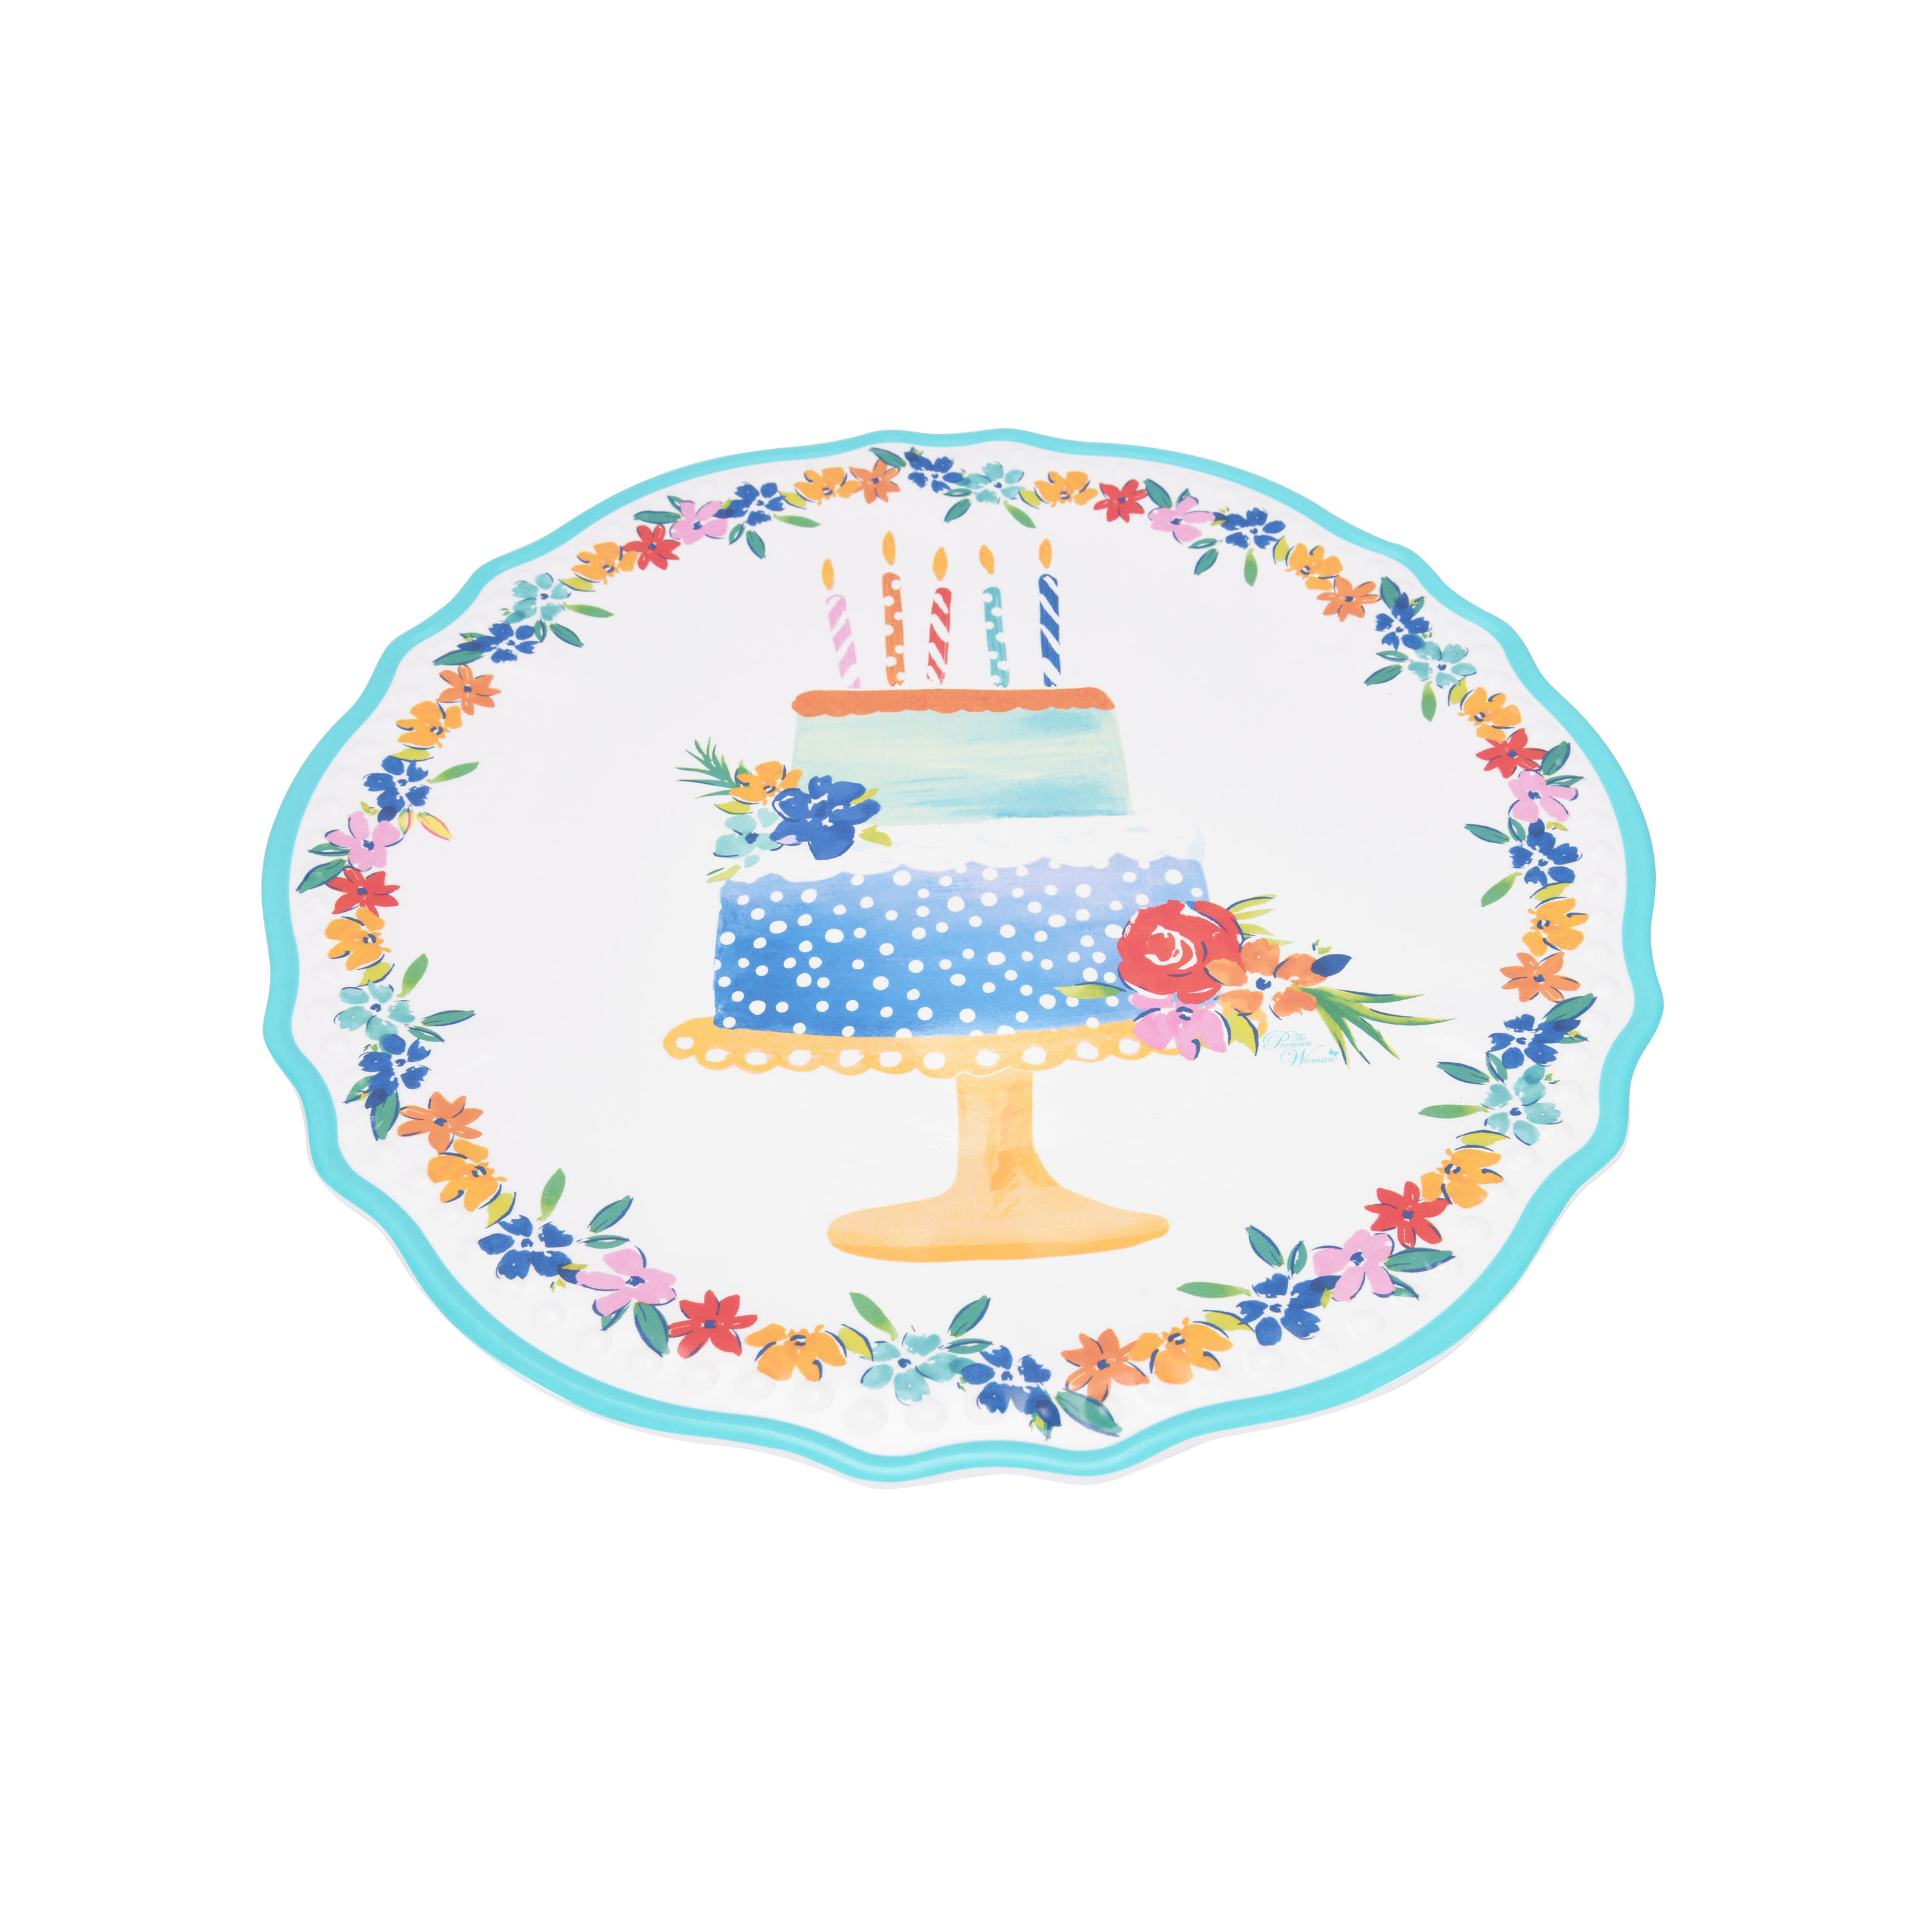 Pioneer Woman 14-inch Birthday Platter Assortment - image 5 of 8